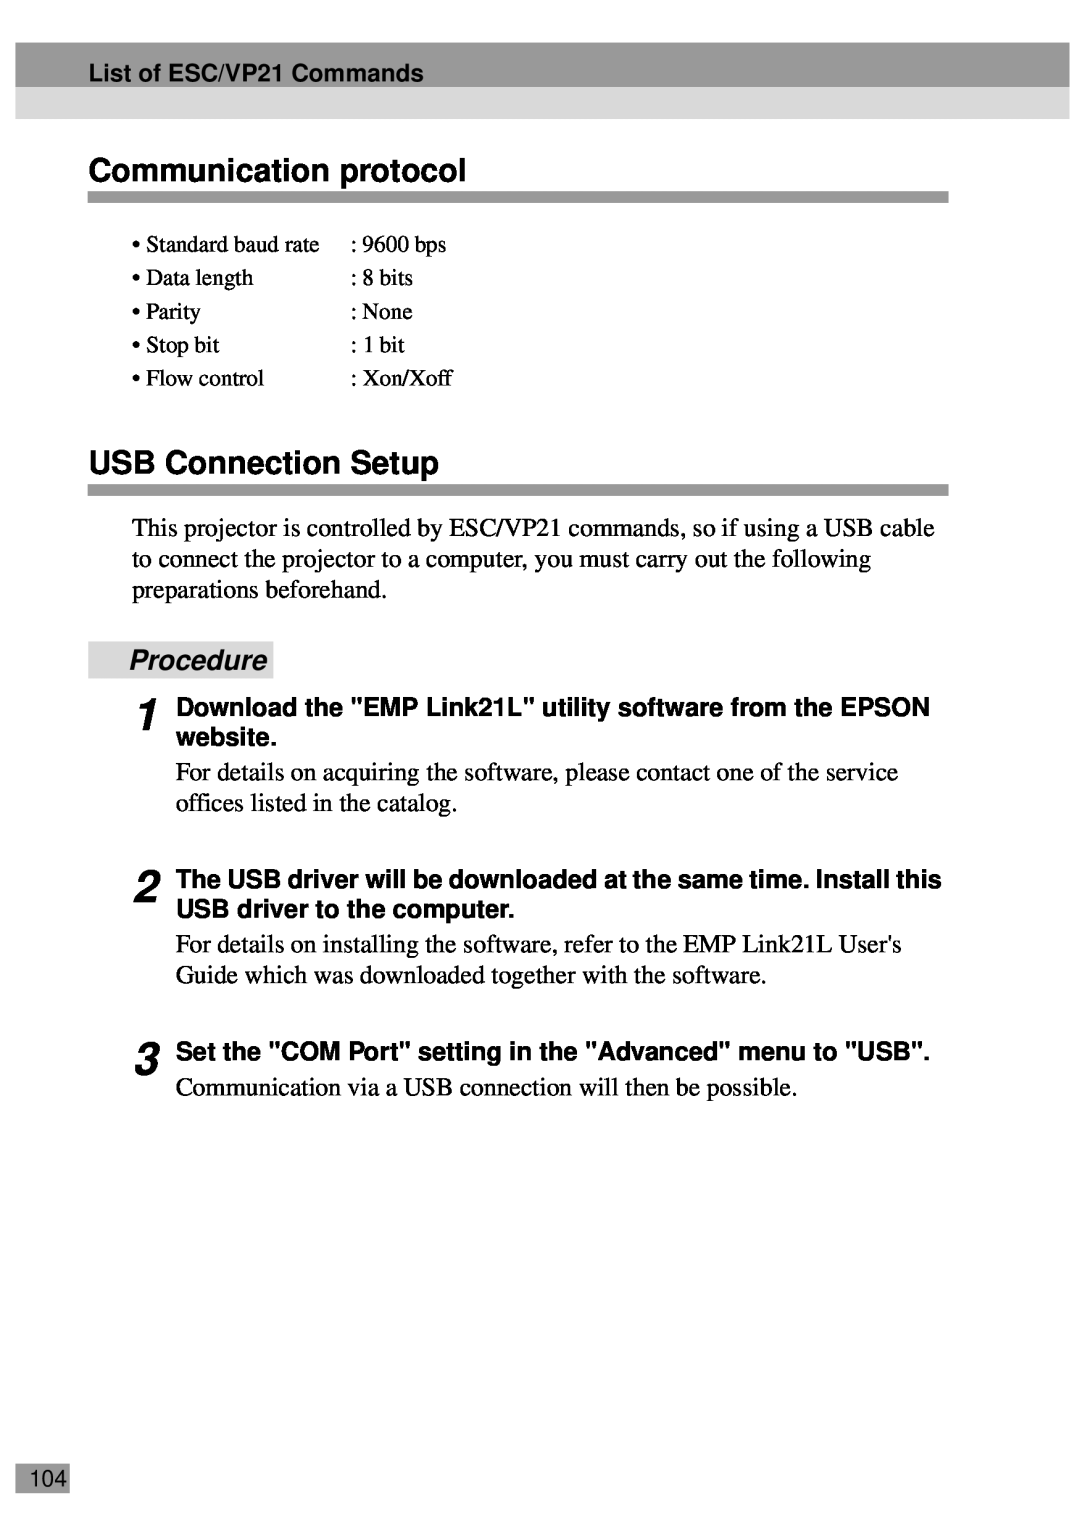 Epson EMP-800UG, ELP-811 manual Communication protocol, USB Connection Setup, Procedure, List of ESC/VP21 Commands, website 